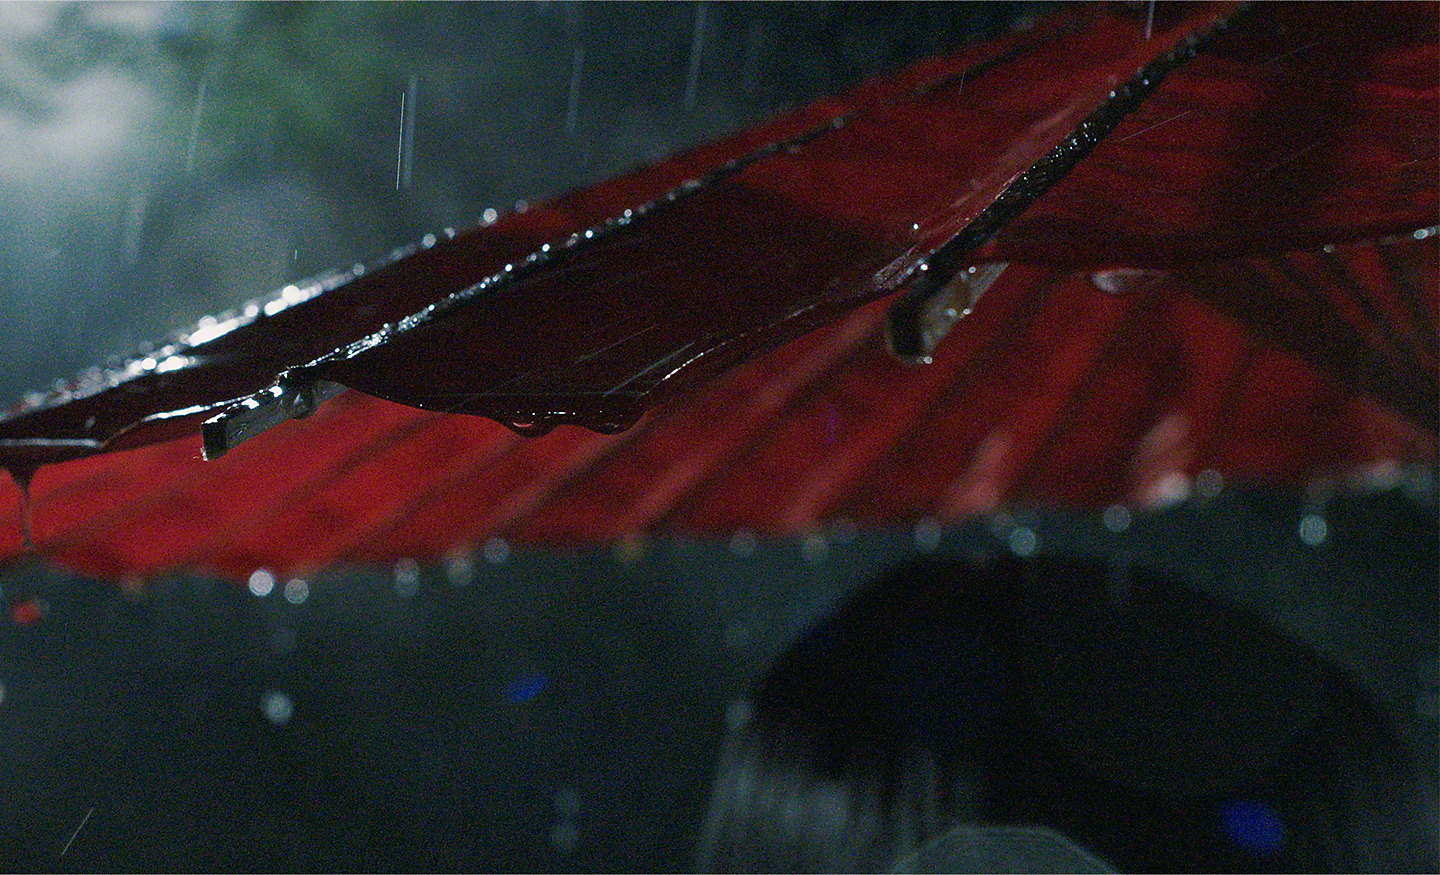 Rain falling on a red parasol